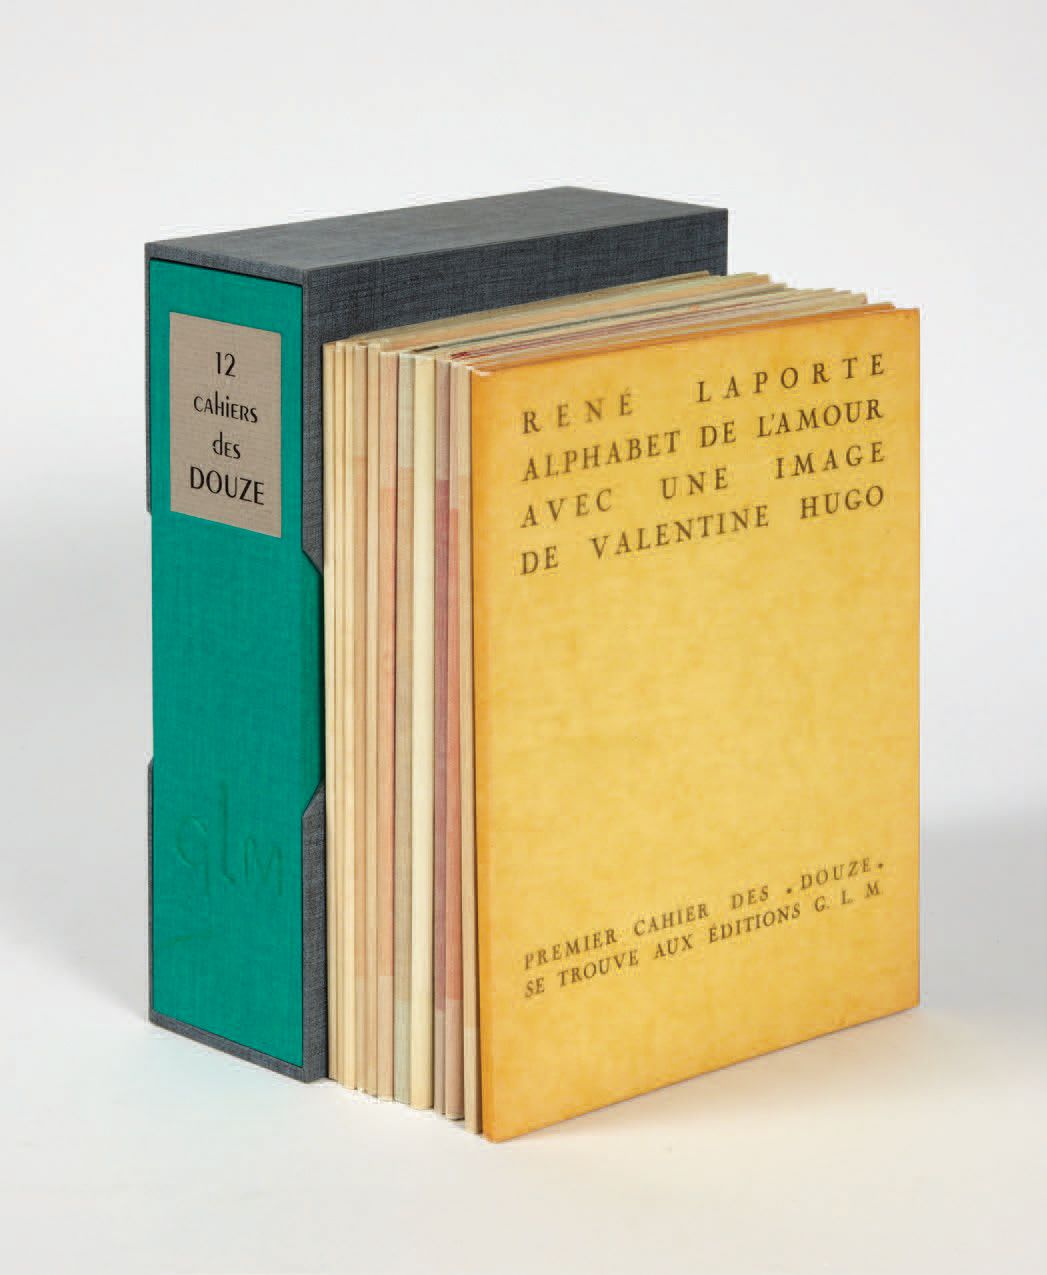 COLLECTION DES DOUZE. Paris, Éditions GLM, 1935-1938.
12 Bände in-8, broschiert,&hellip;